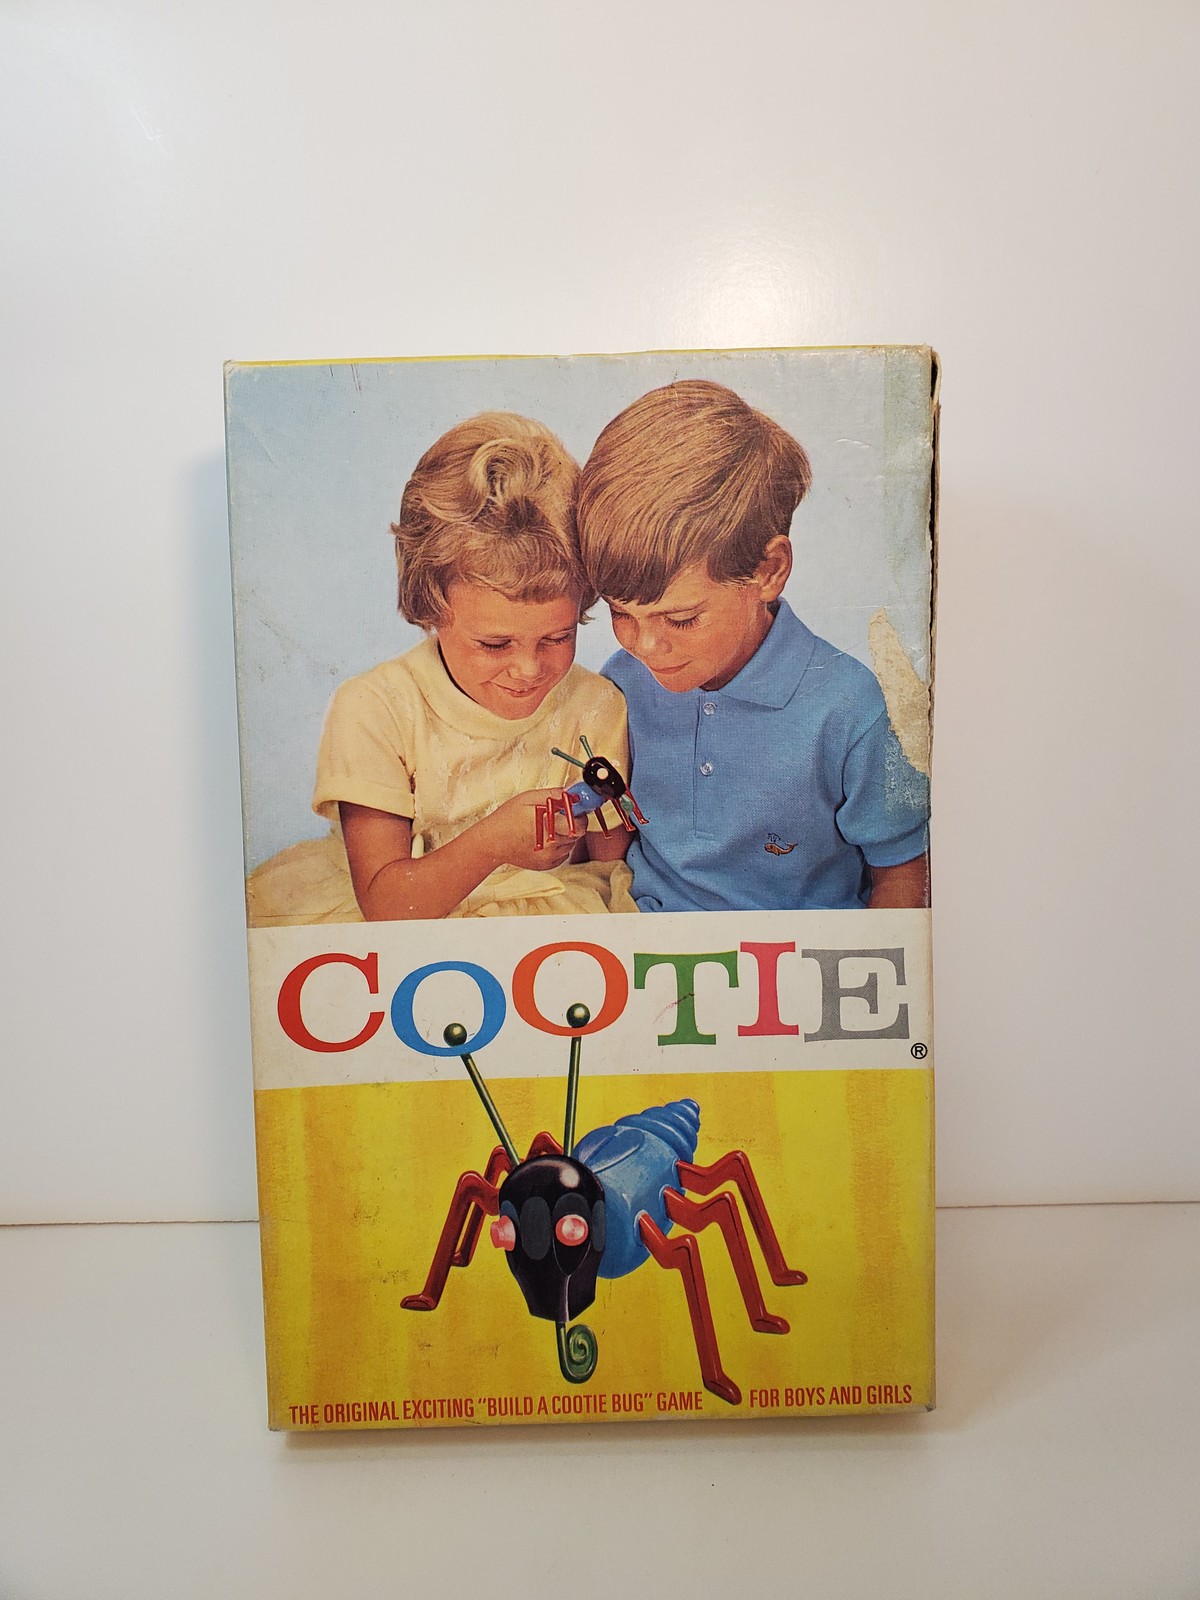 Vintage Cootie Game 1949 replacement parts original book box - $32.00